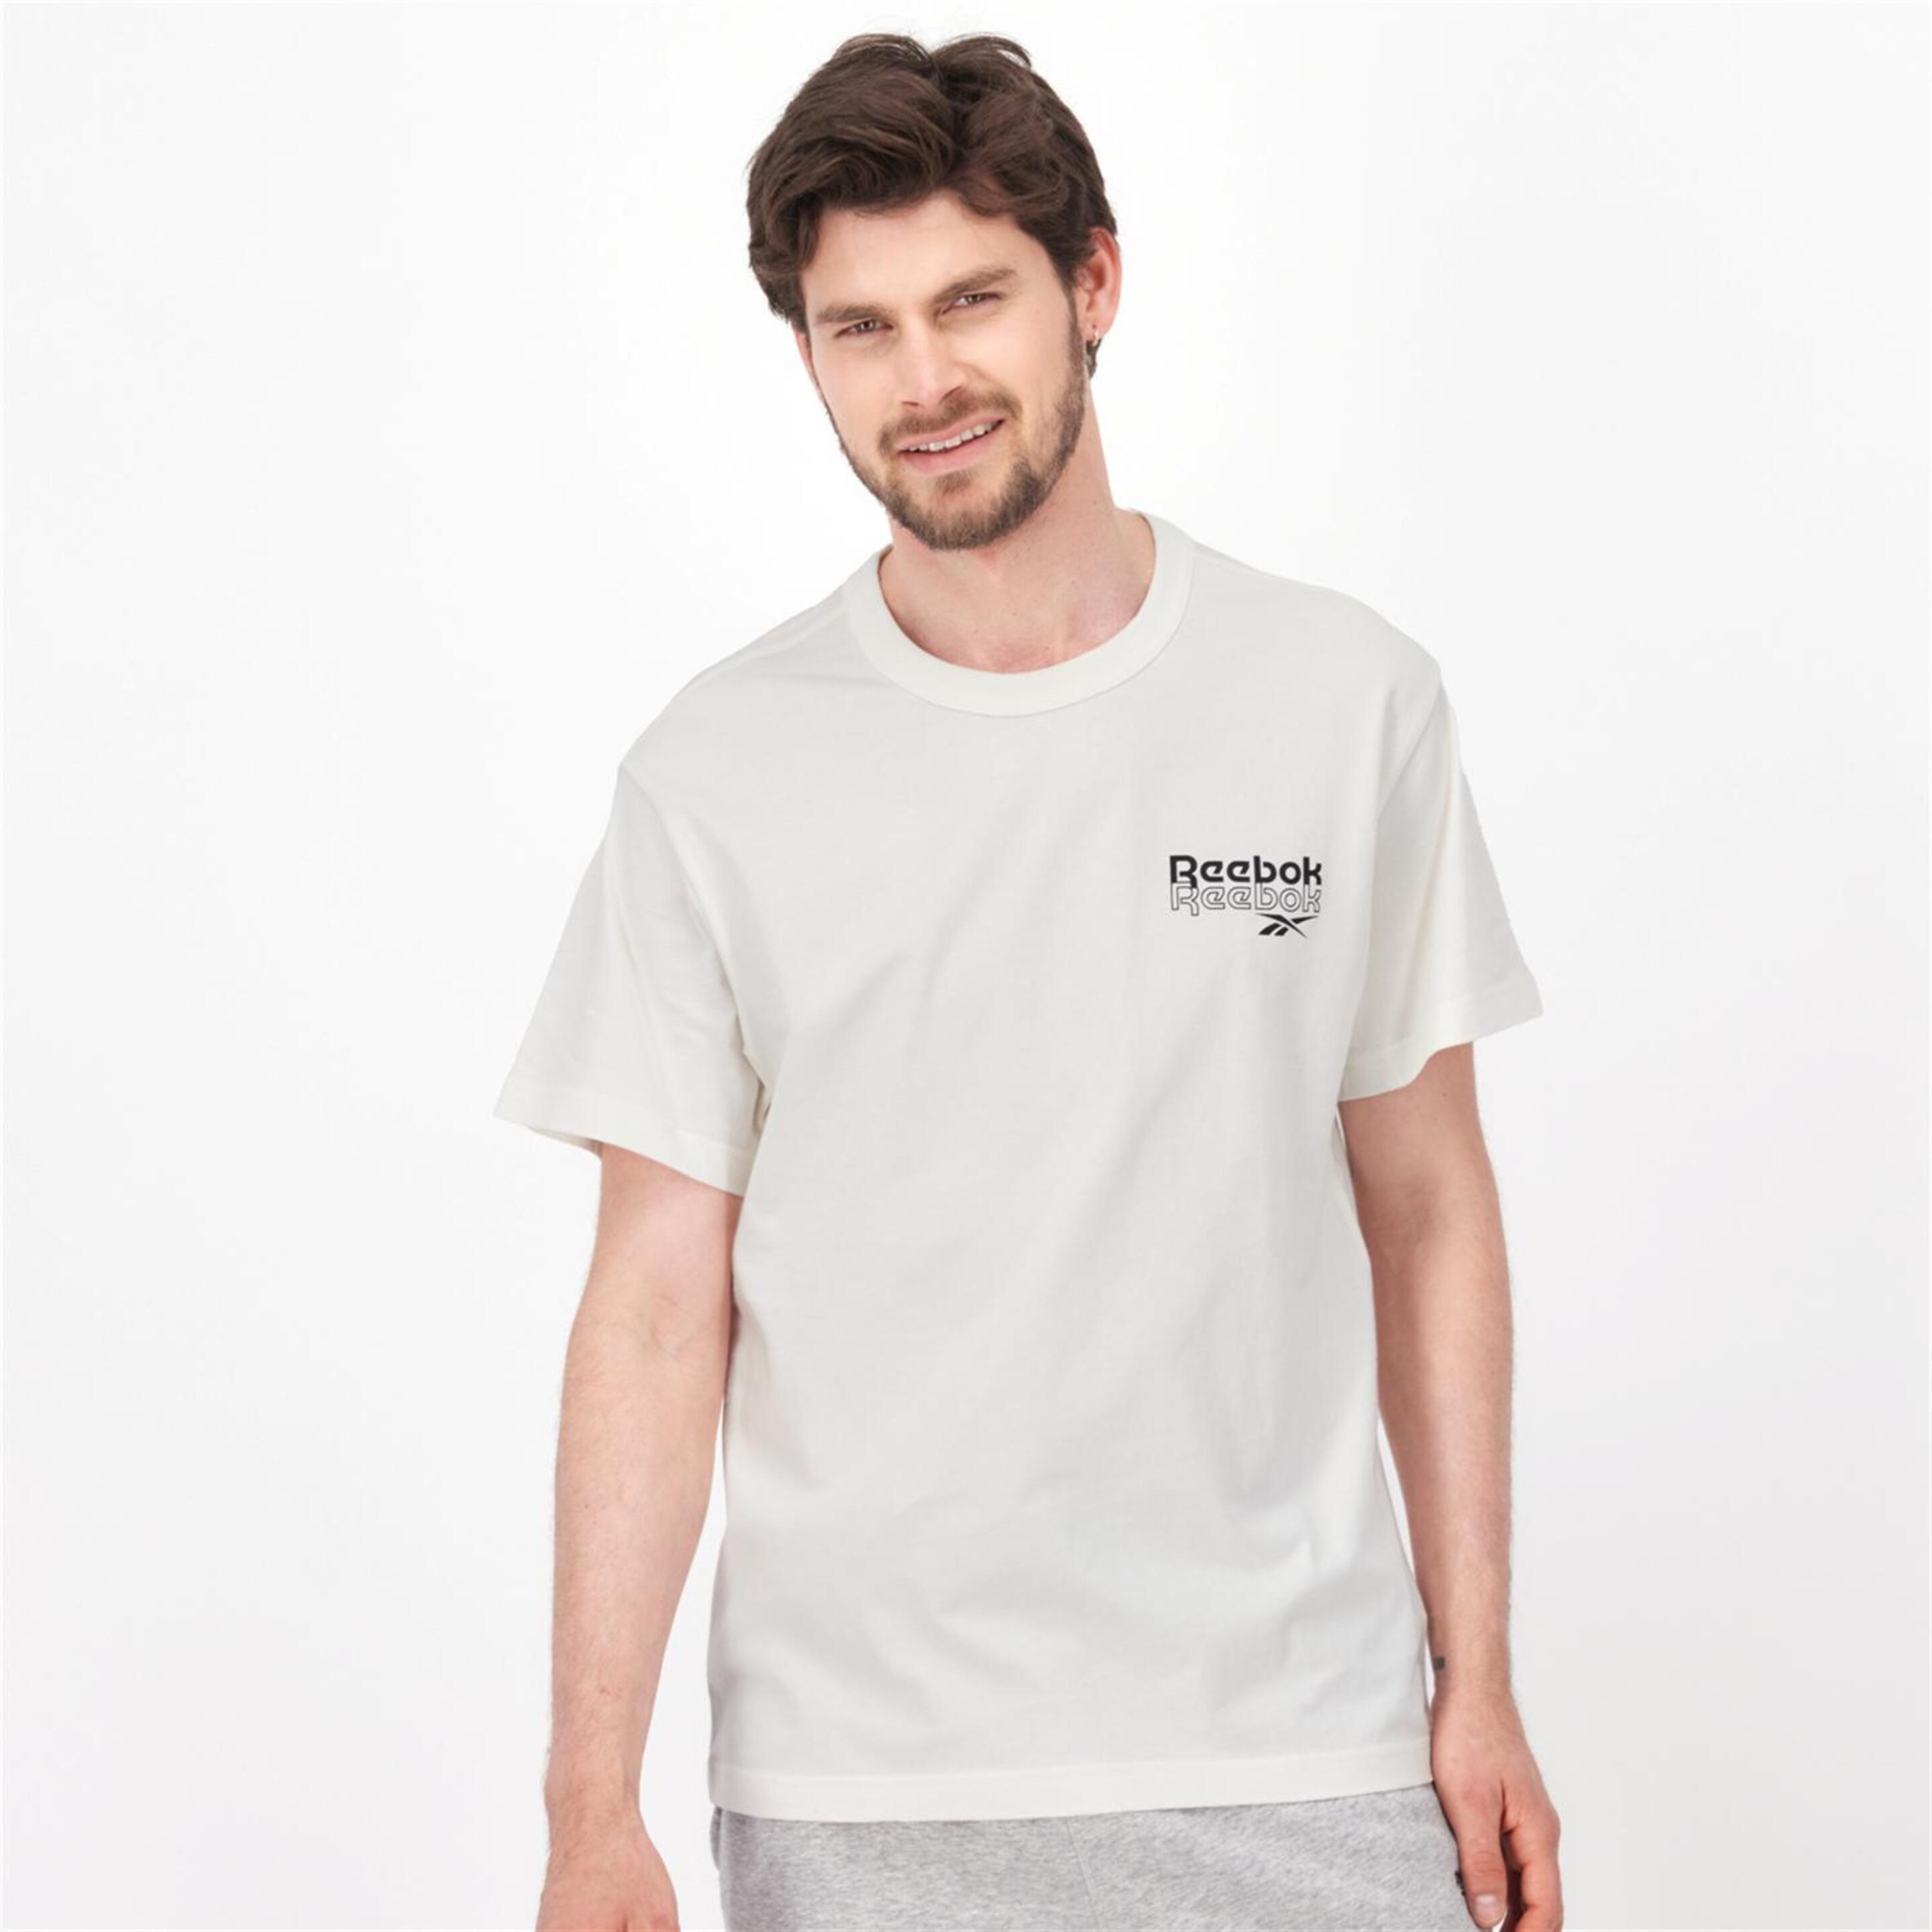 Reebok Ri - blanco - Camiseta Hombre